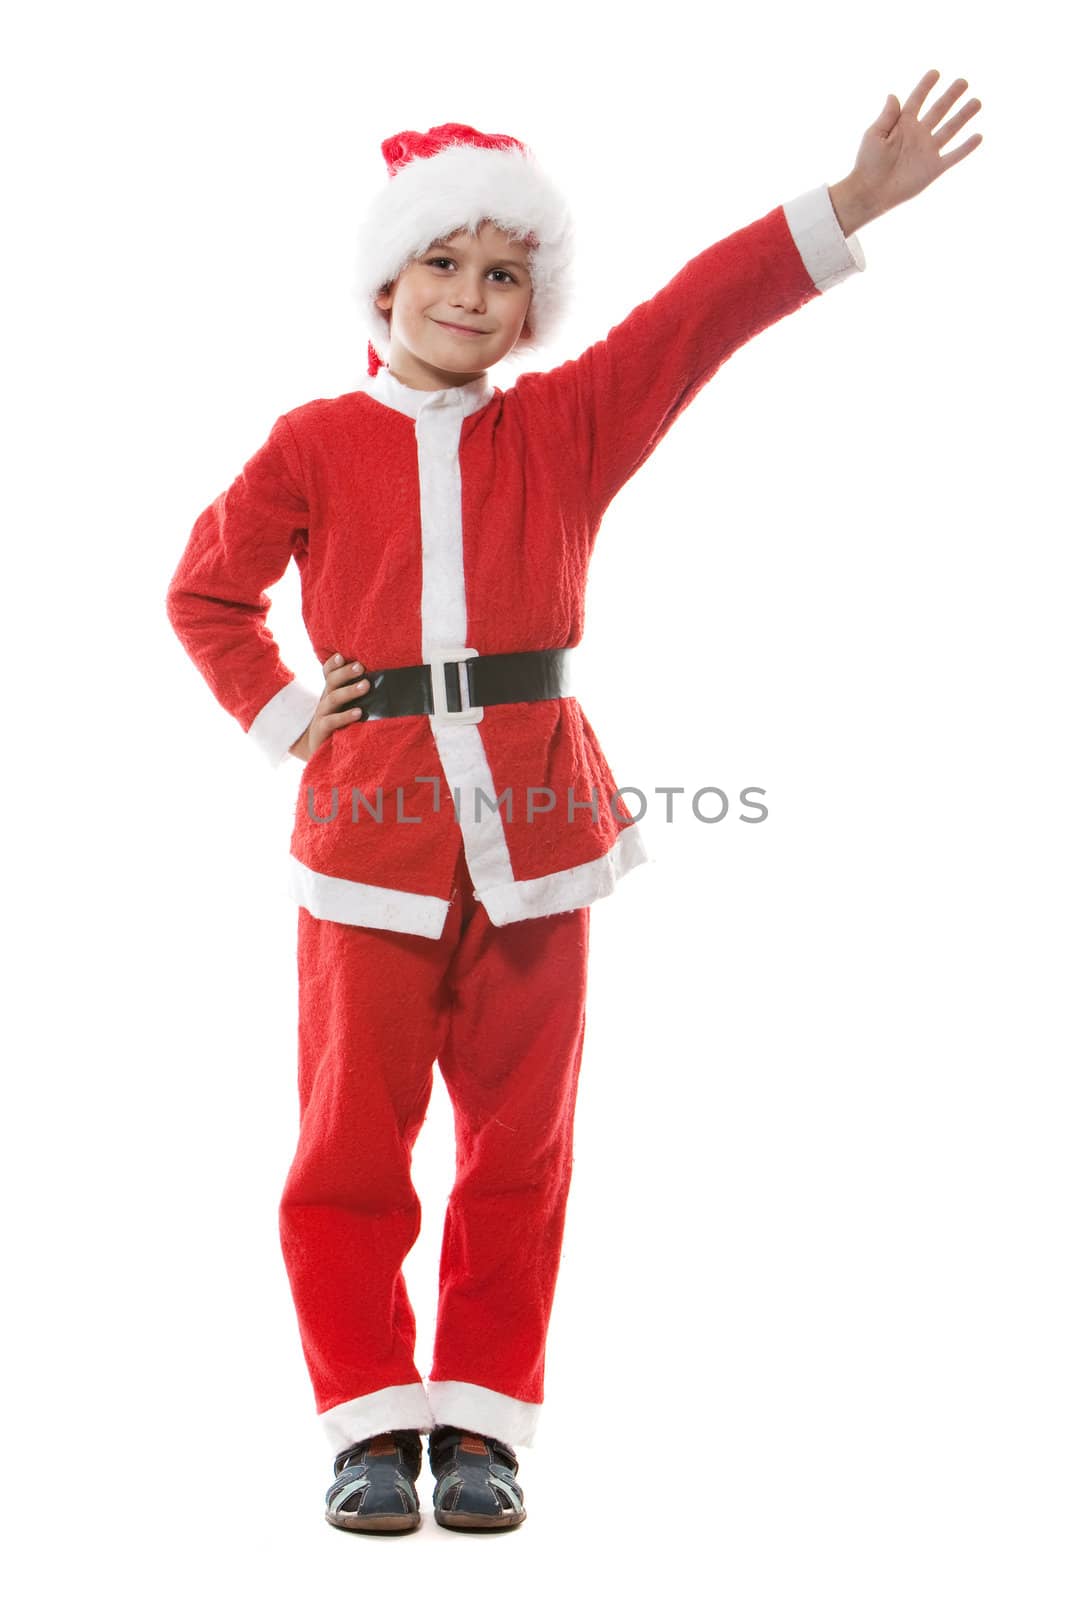 Boy dressed as Santa Claus by bloodua